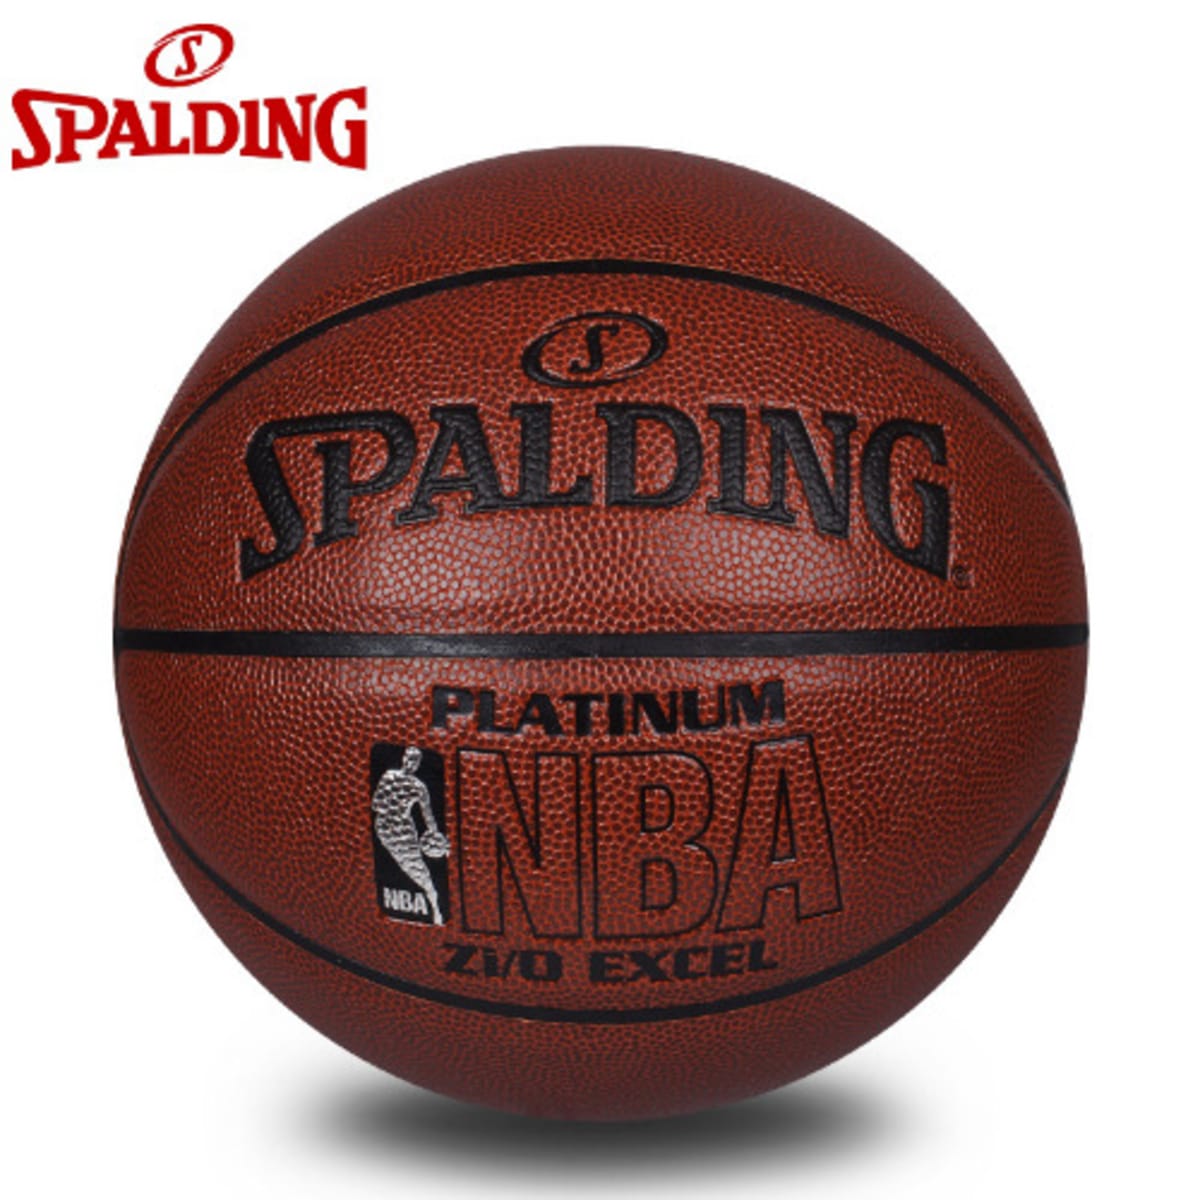 Spalding Nba Professional Basketball Online Shopping | Konga